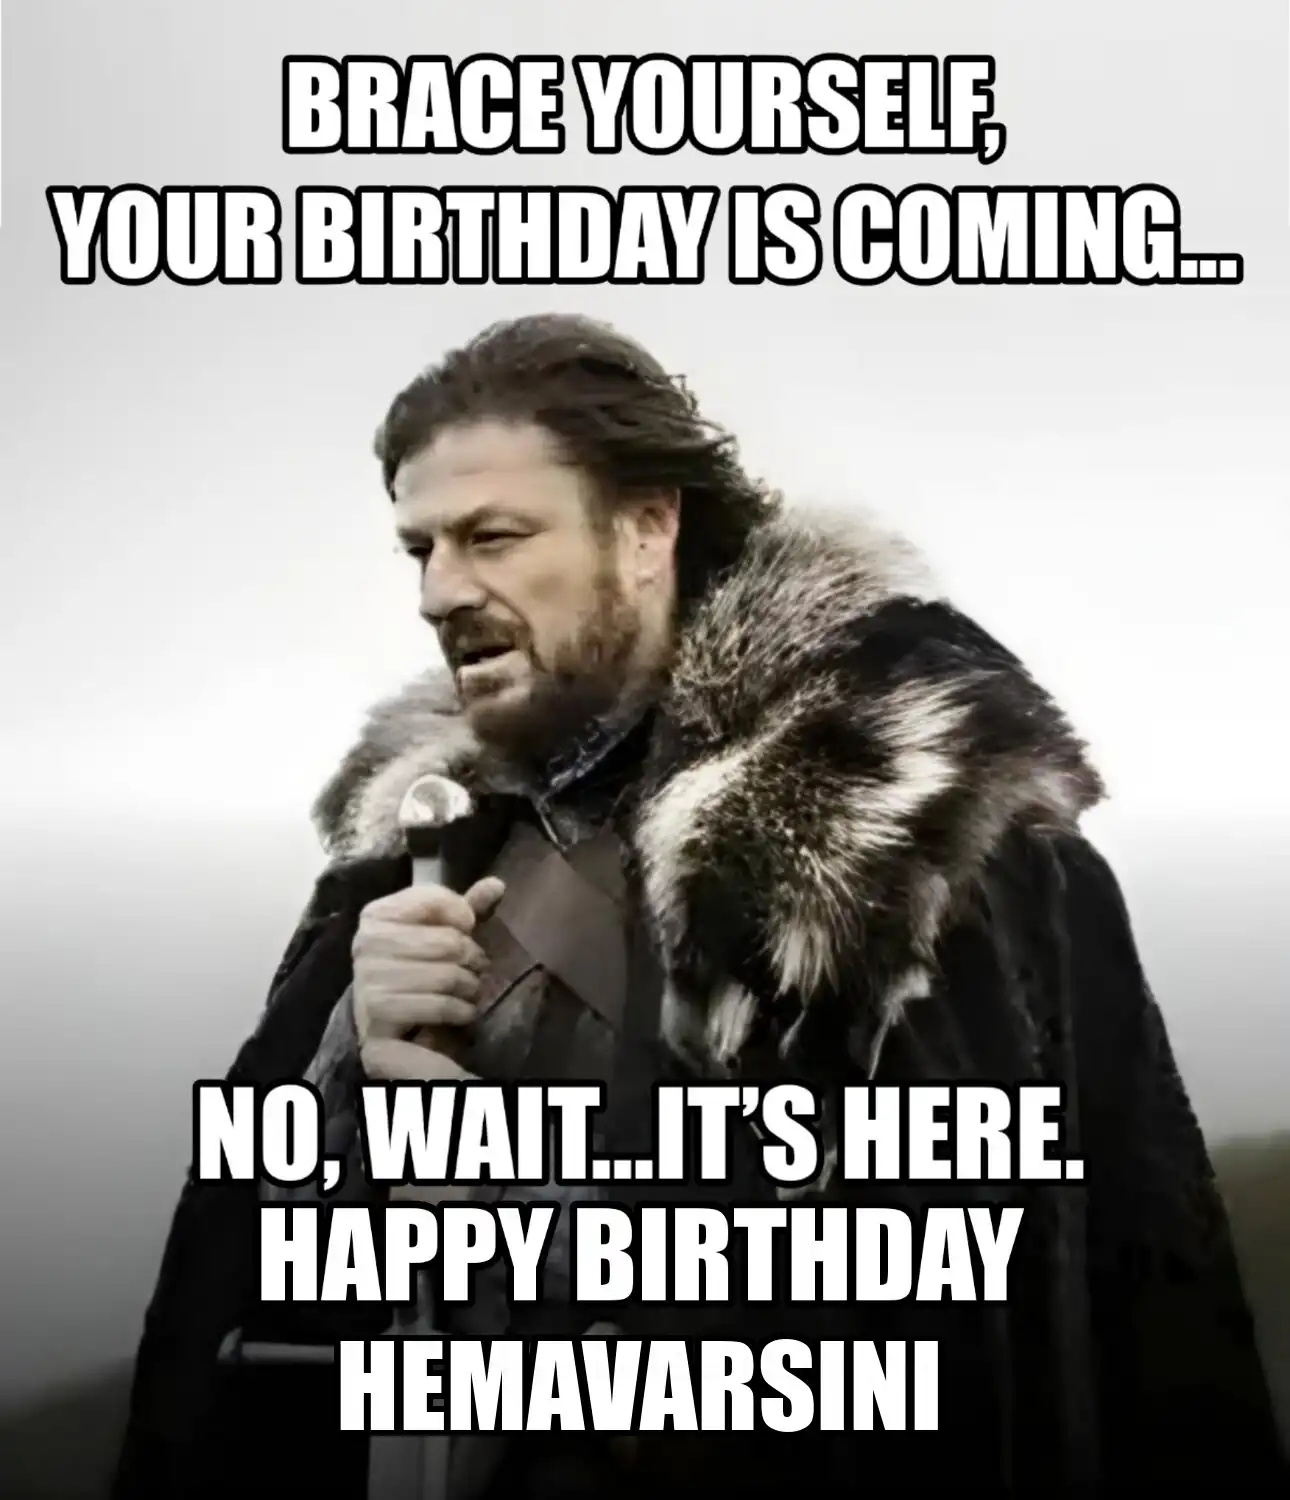 Happy Birthday Hemavarsini Brace Yourself Your Birthday Is Coming Meme